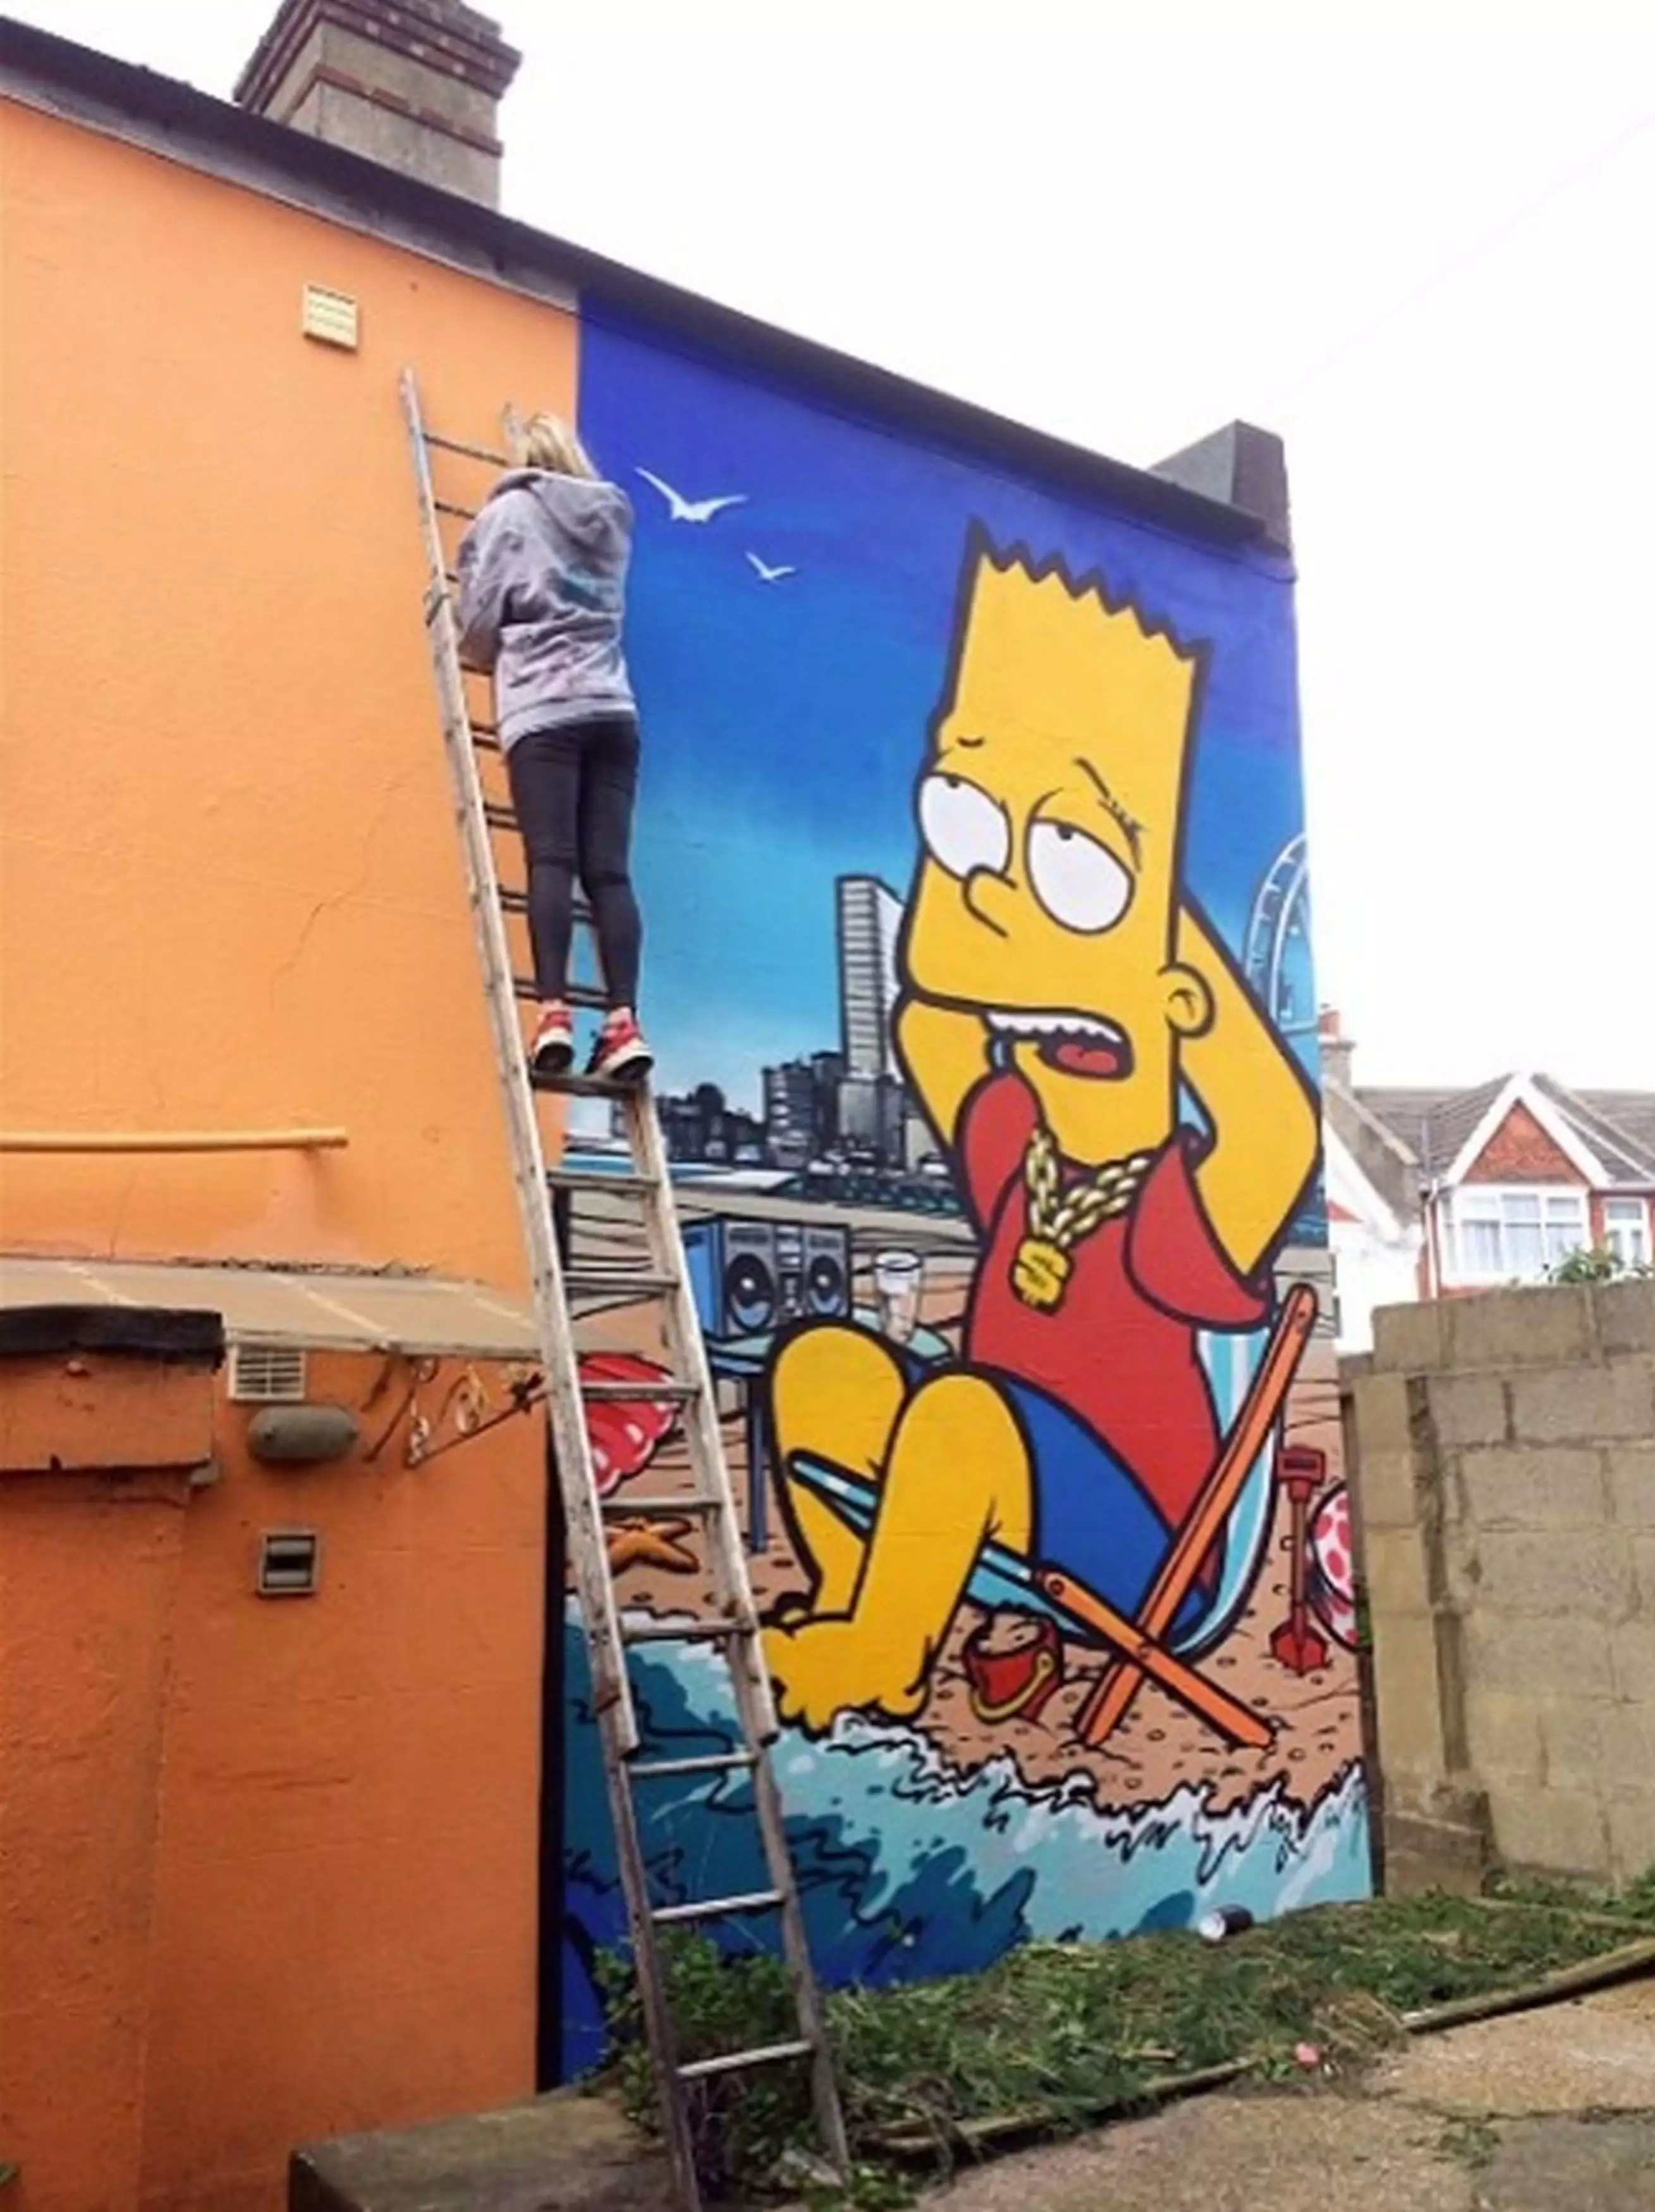 Charlie's new home has huge Simpsons' murals (